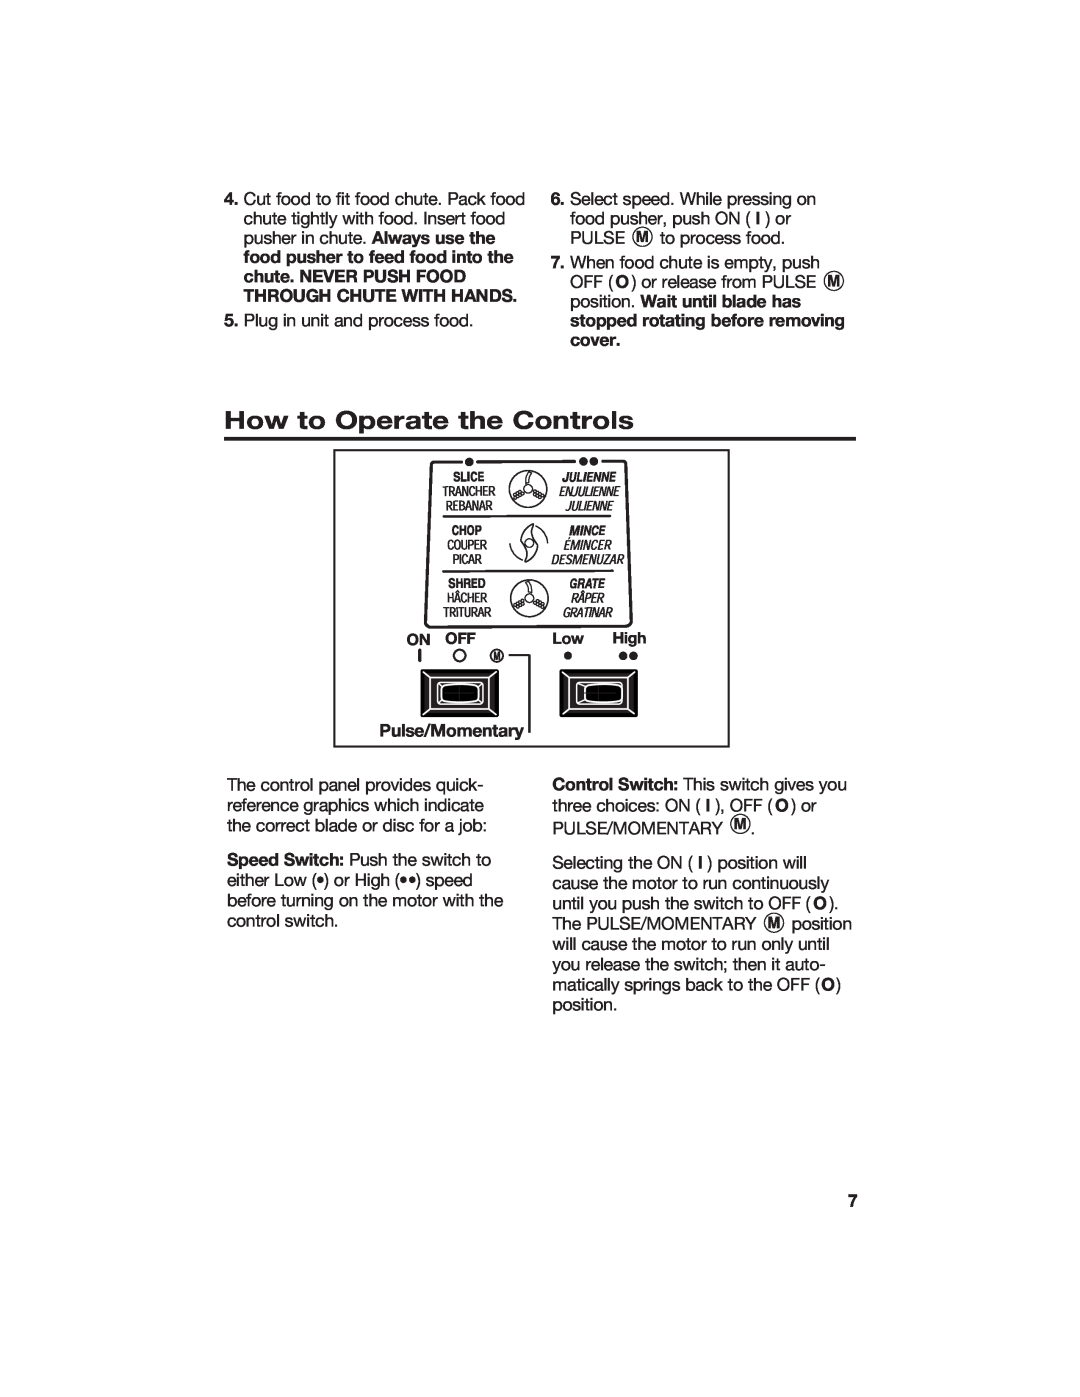 Hamilton Beach 840067300 manual How to Operate the Controls, Pulse/Momentary 